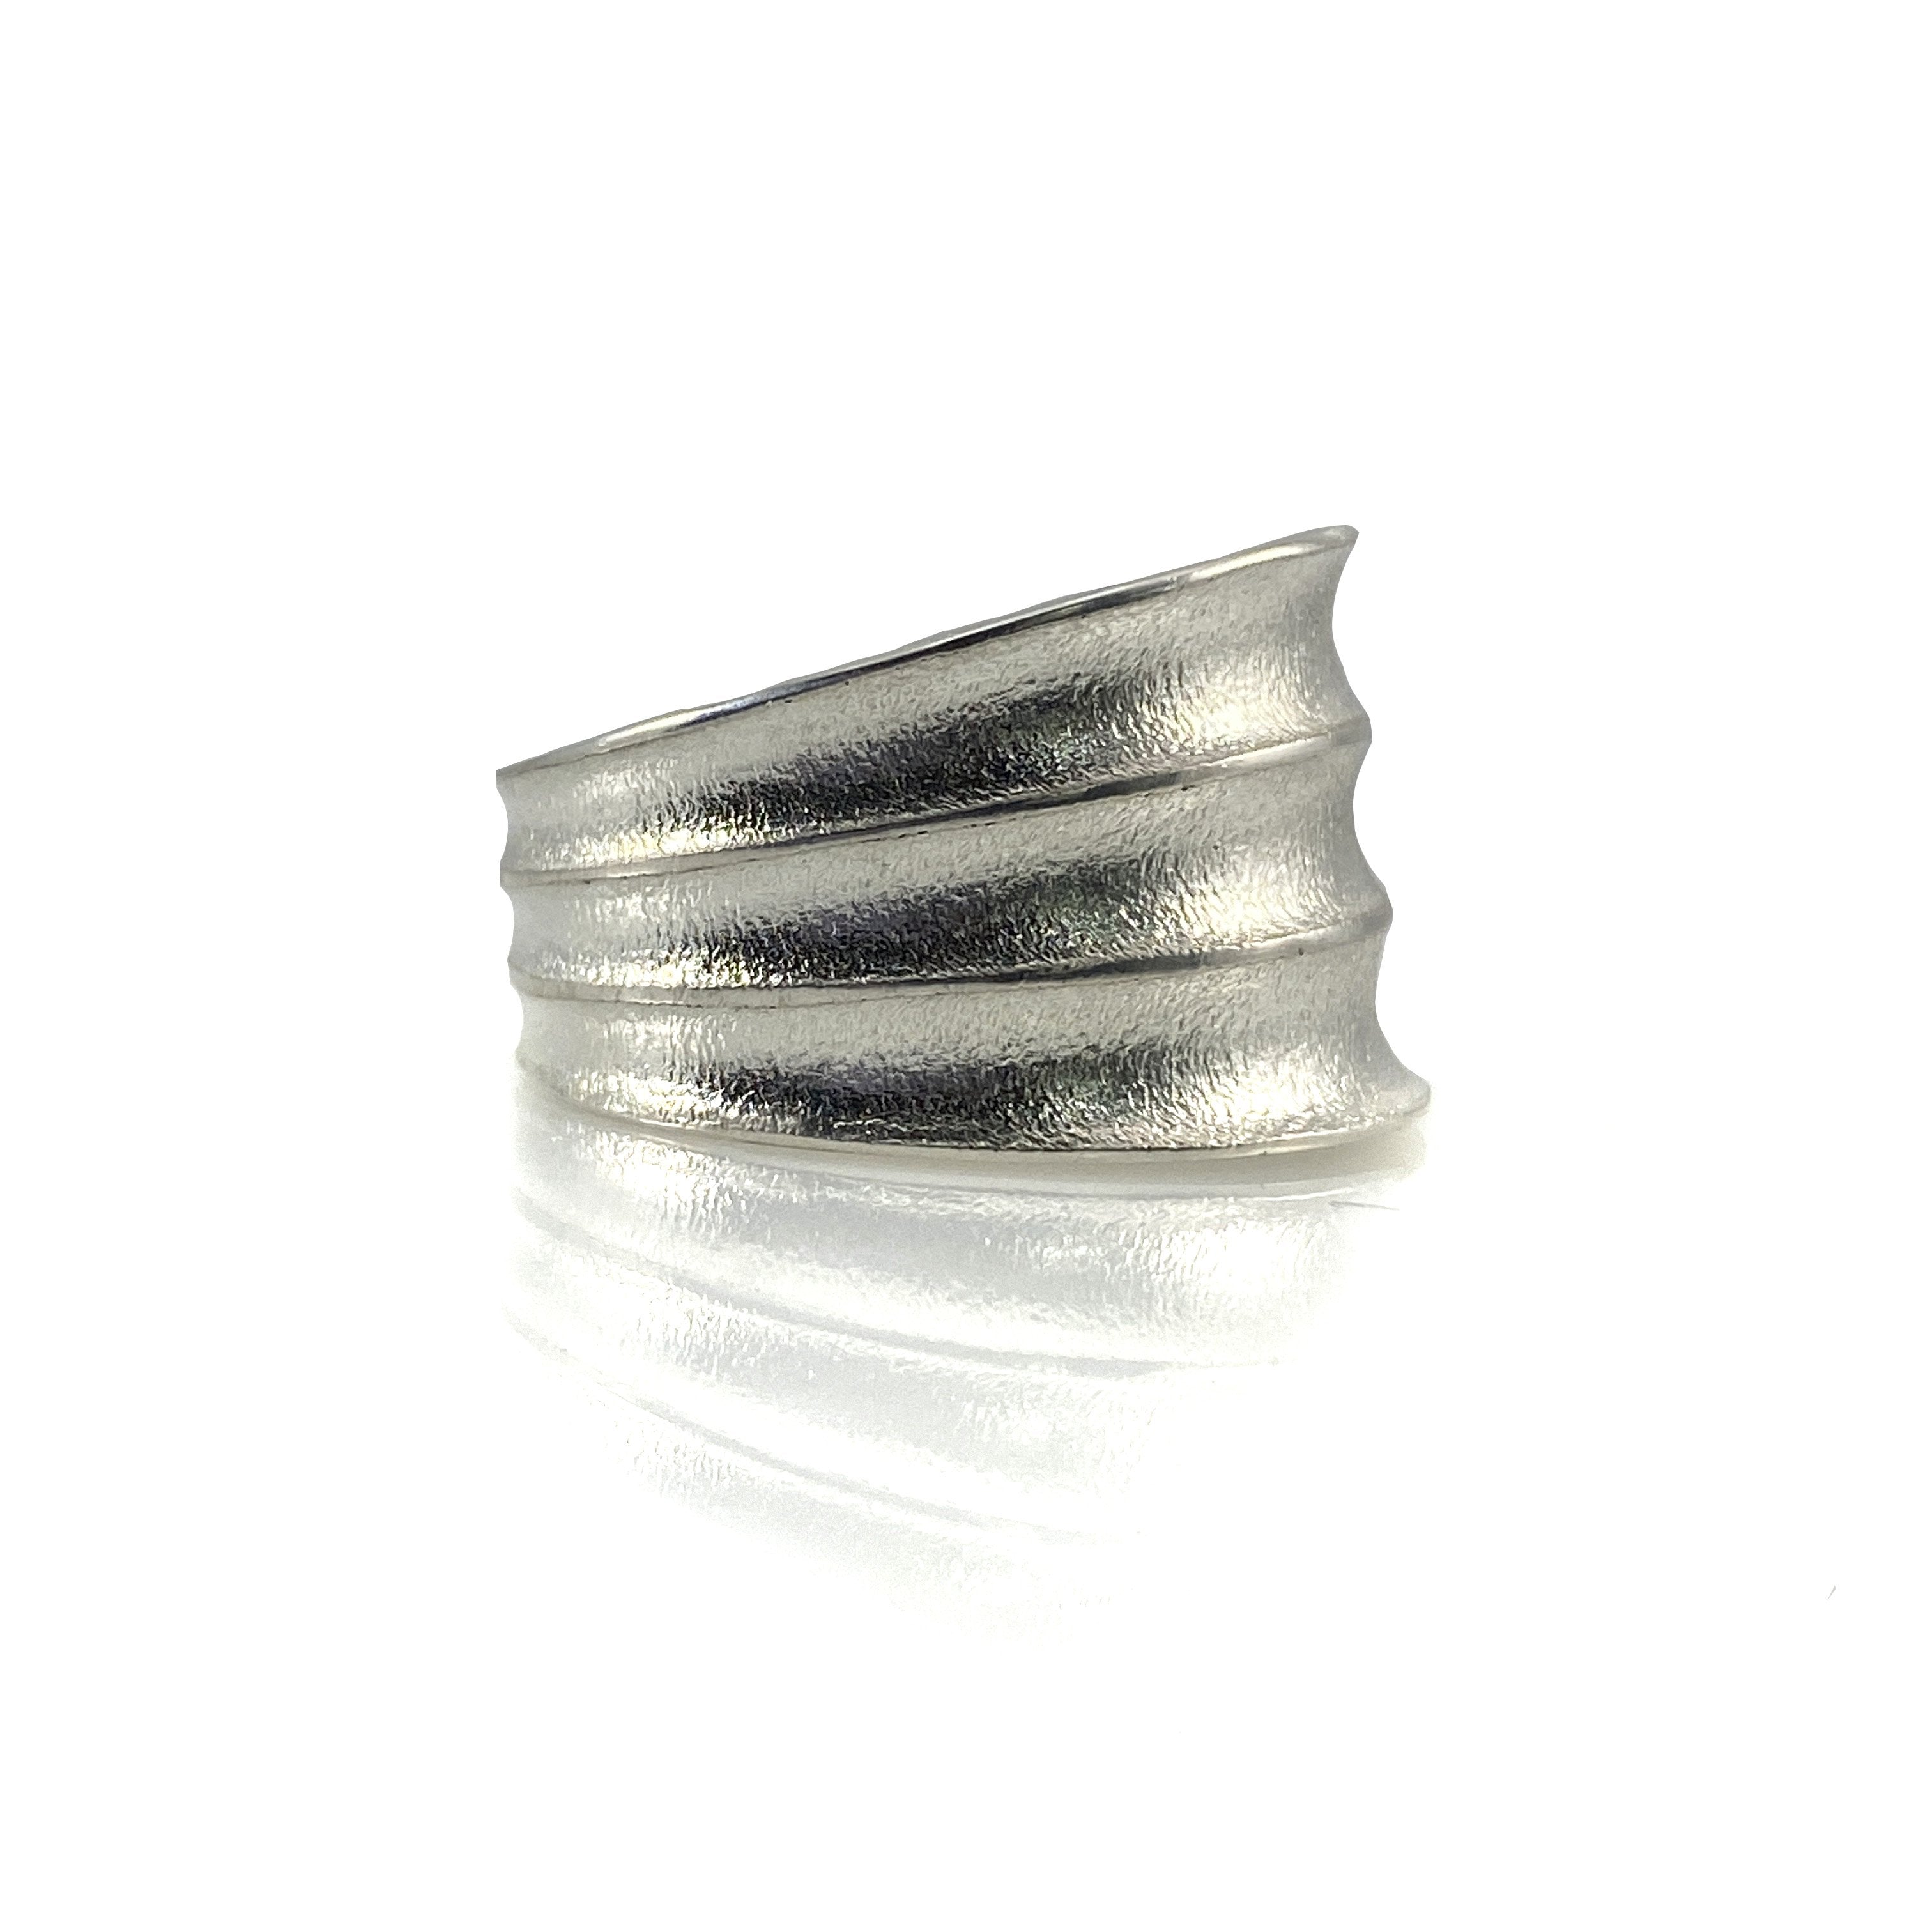 Triad Sterling Silver Ring